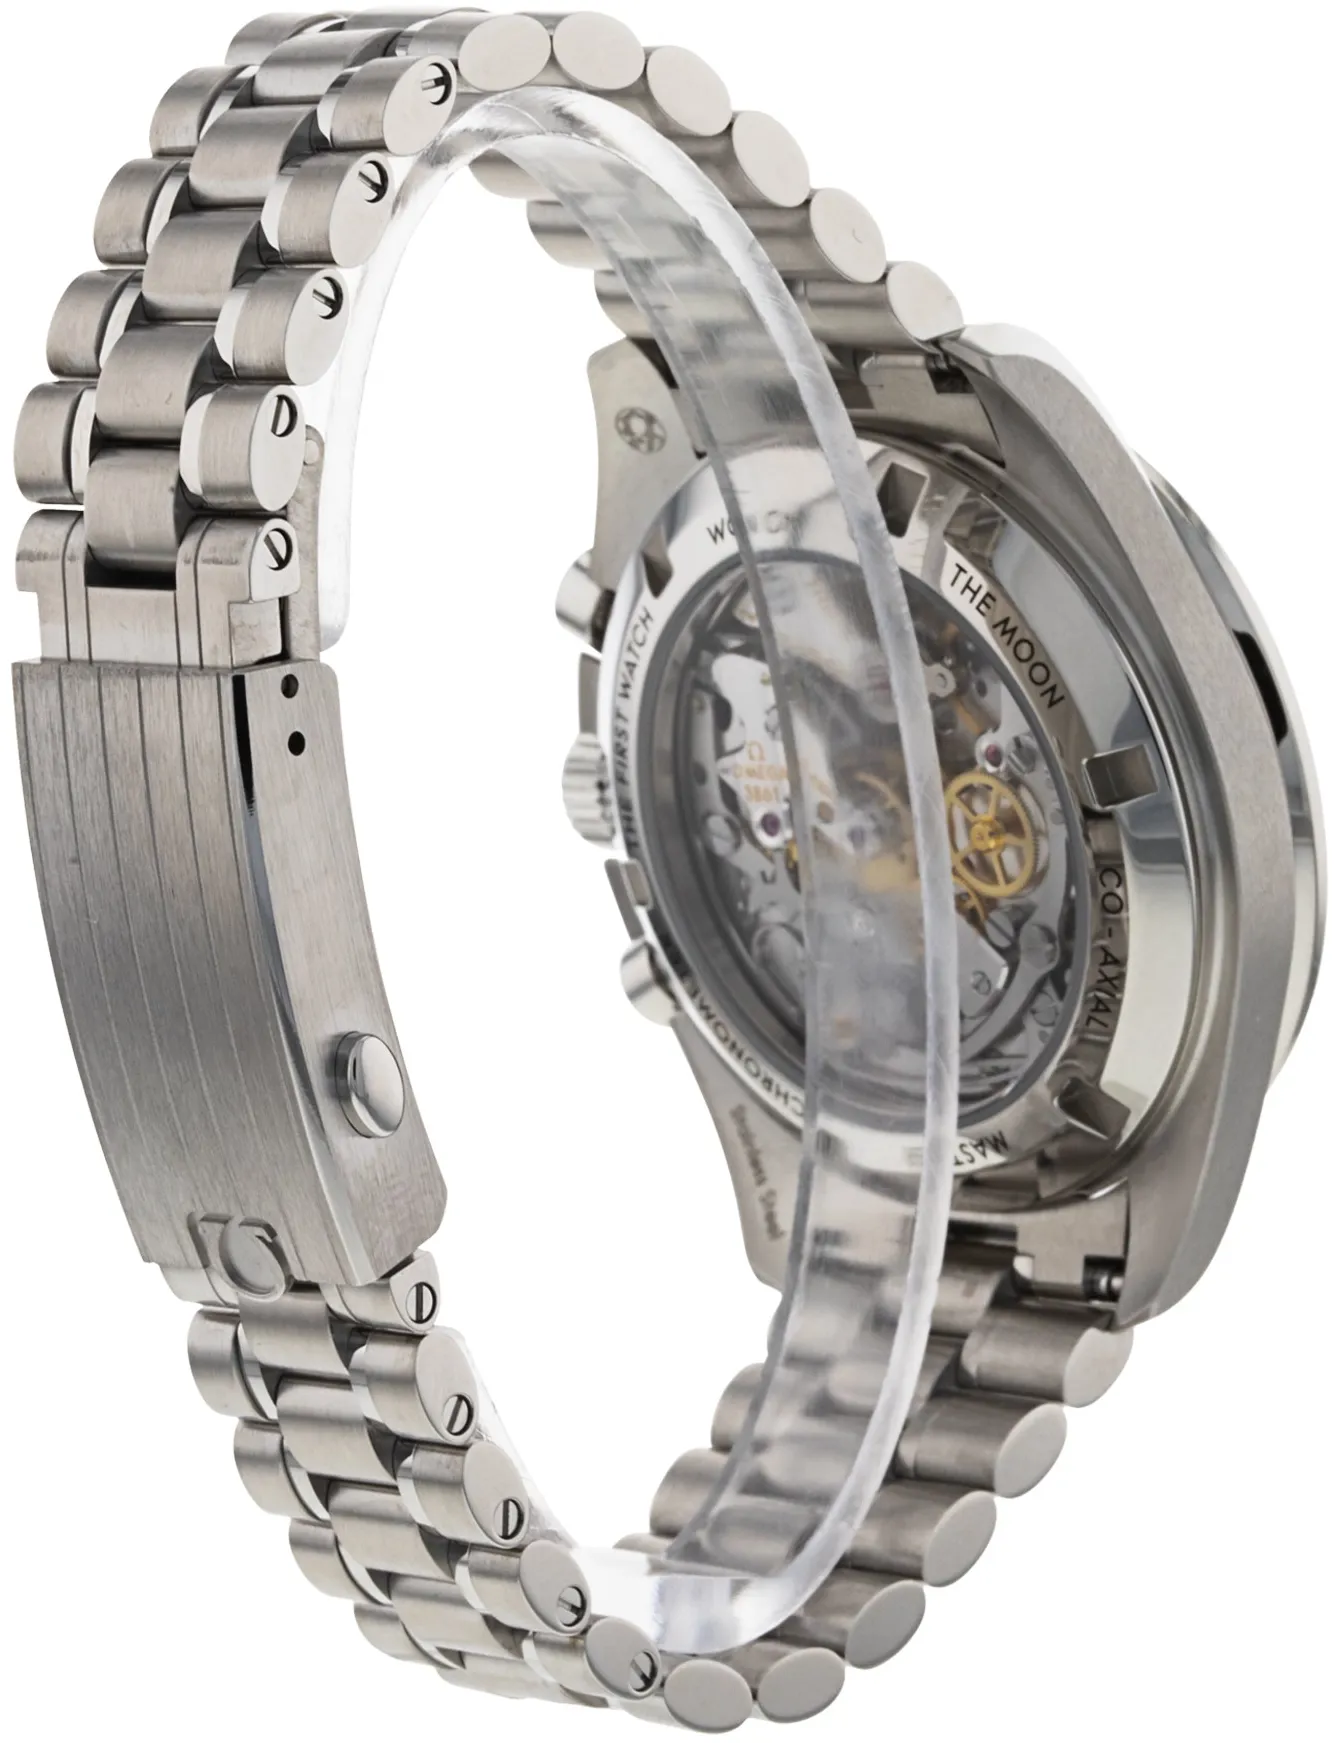 Omega Speedmaster Moon watch 310.30.42.50.01.002 42mm Stainless steel 2